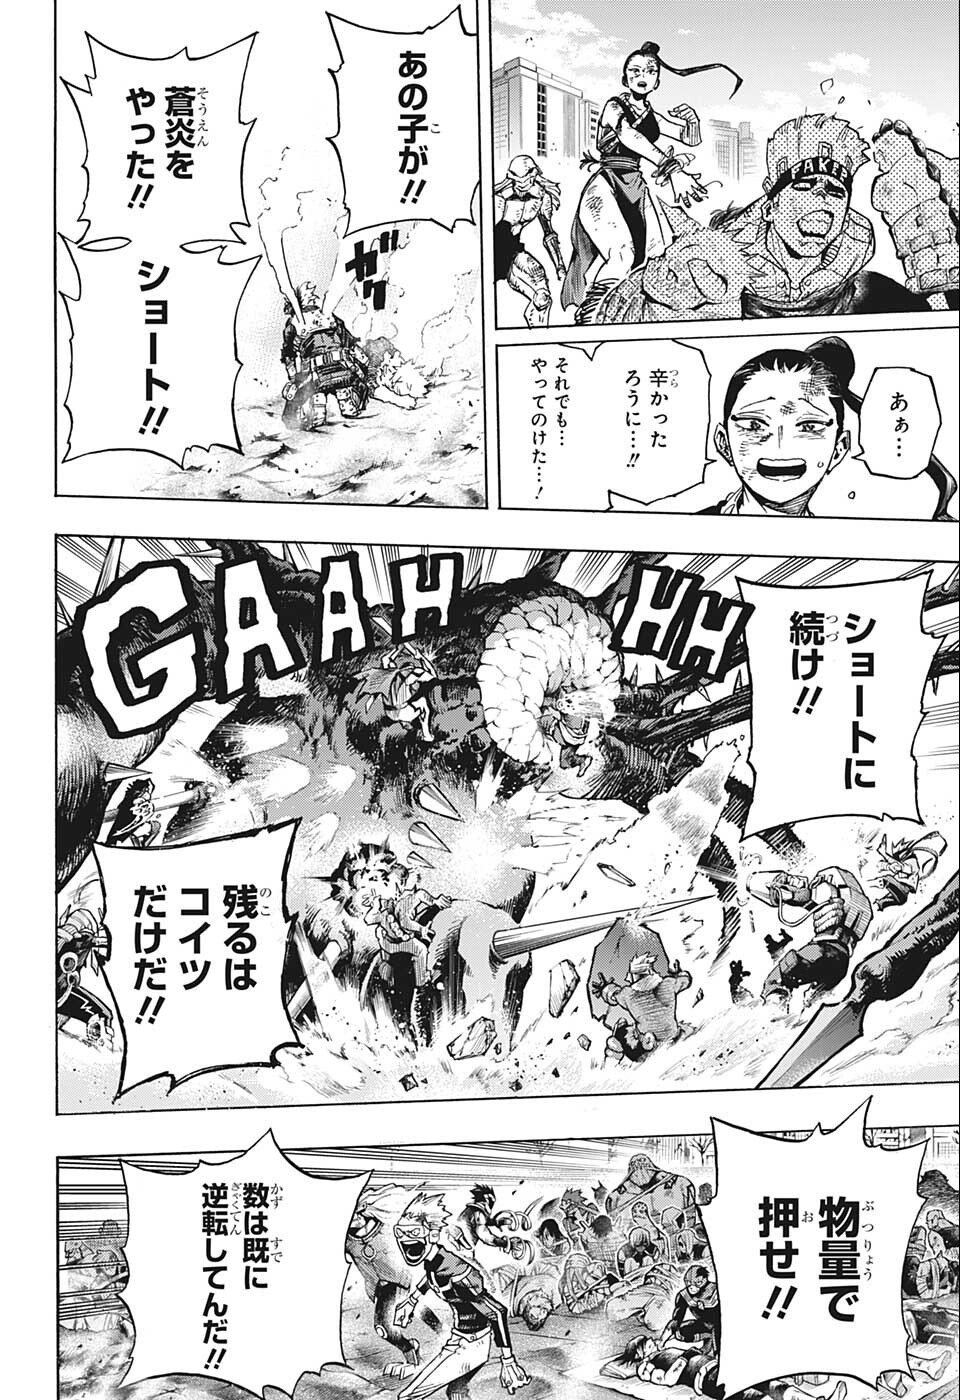 Boku no Hero Academia - Chapter 353 - Page 3